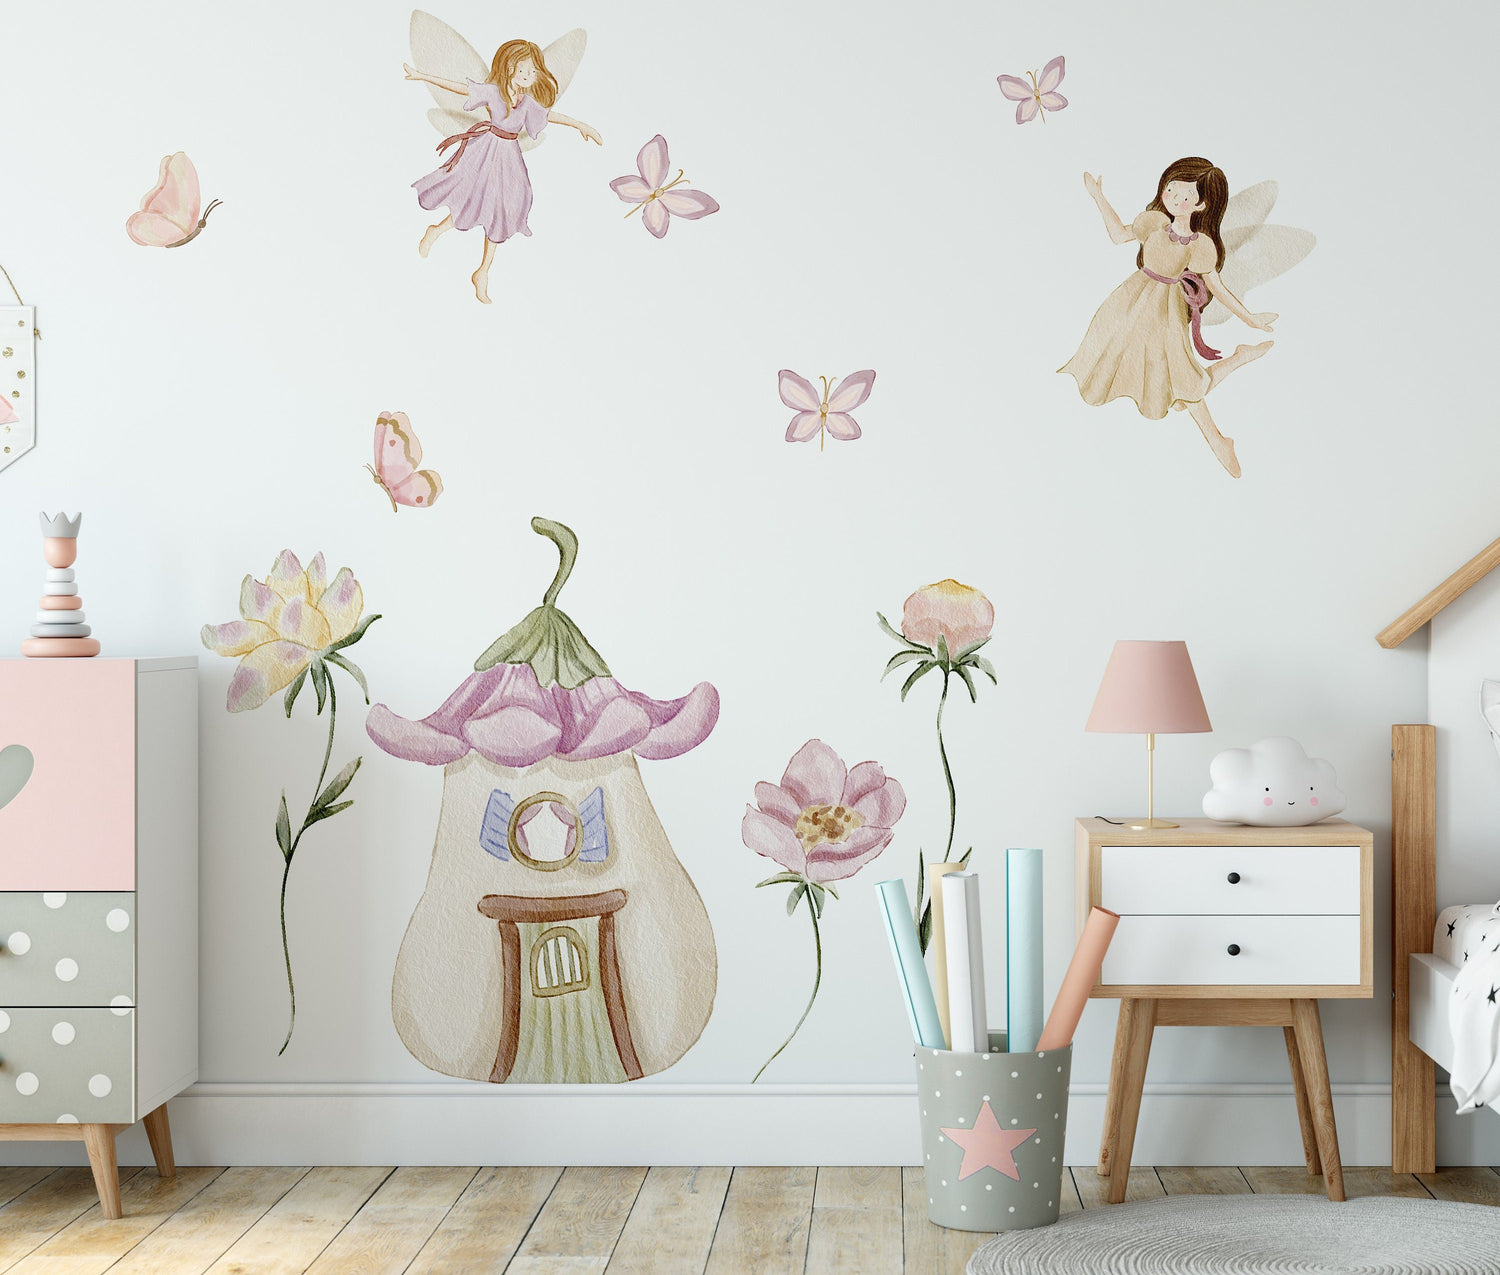 Fairy Wall Stickers, Secret Garden Decals